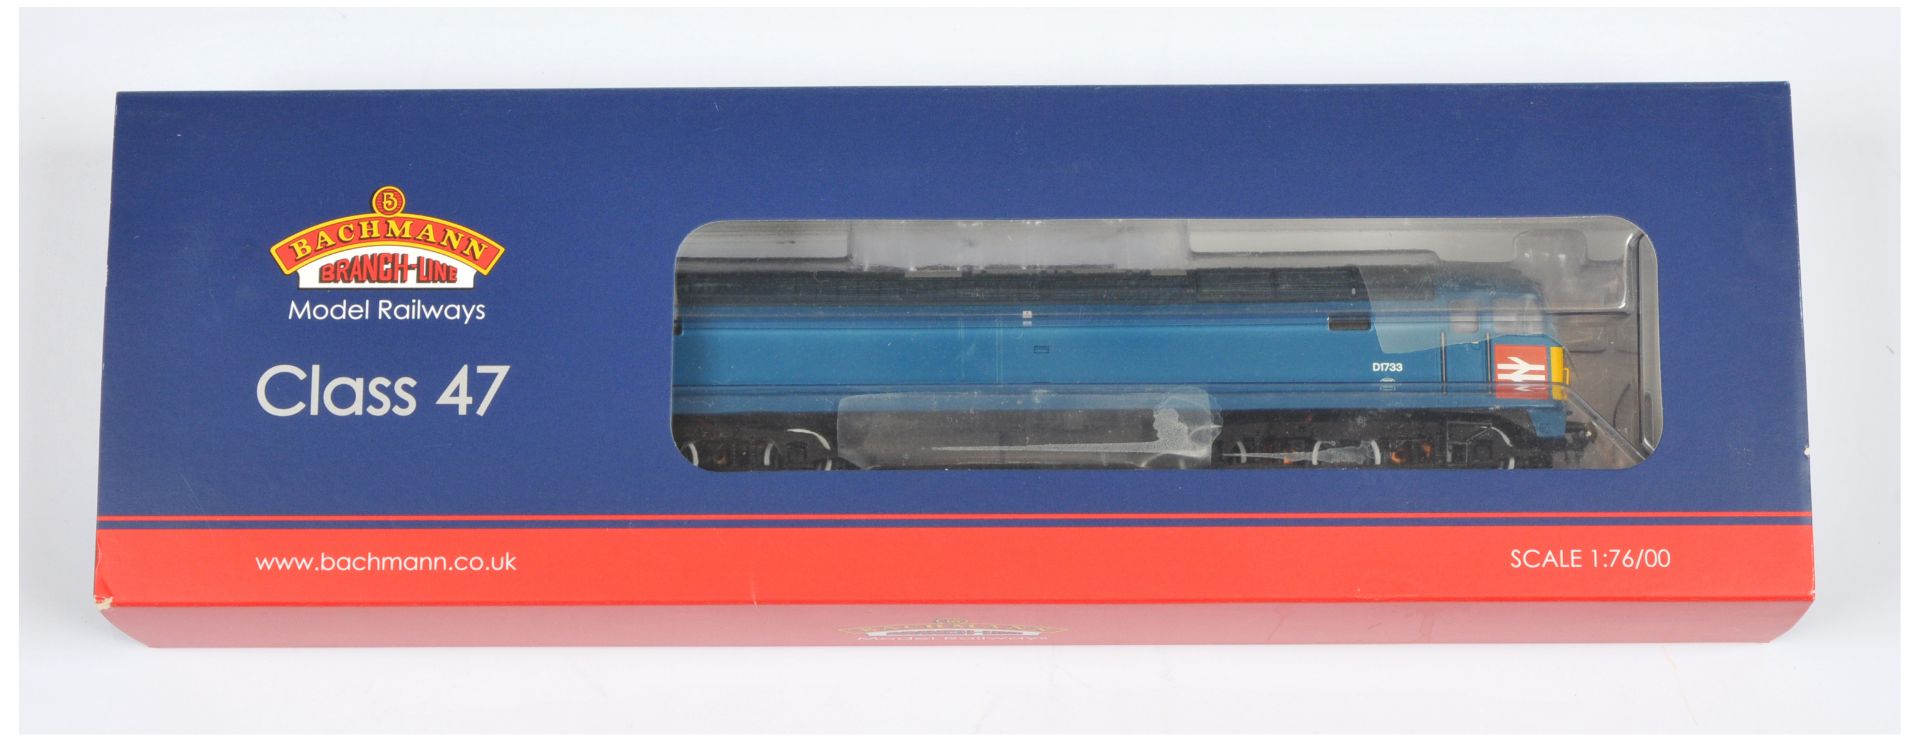 Bachmann OO Gauge 32-800K (Limited Edition) Class 47 BR XP64 Diesel Locomotive No. D1733, produce...